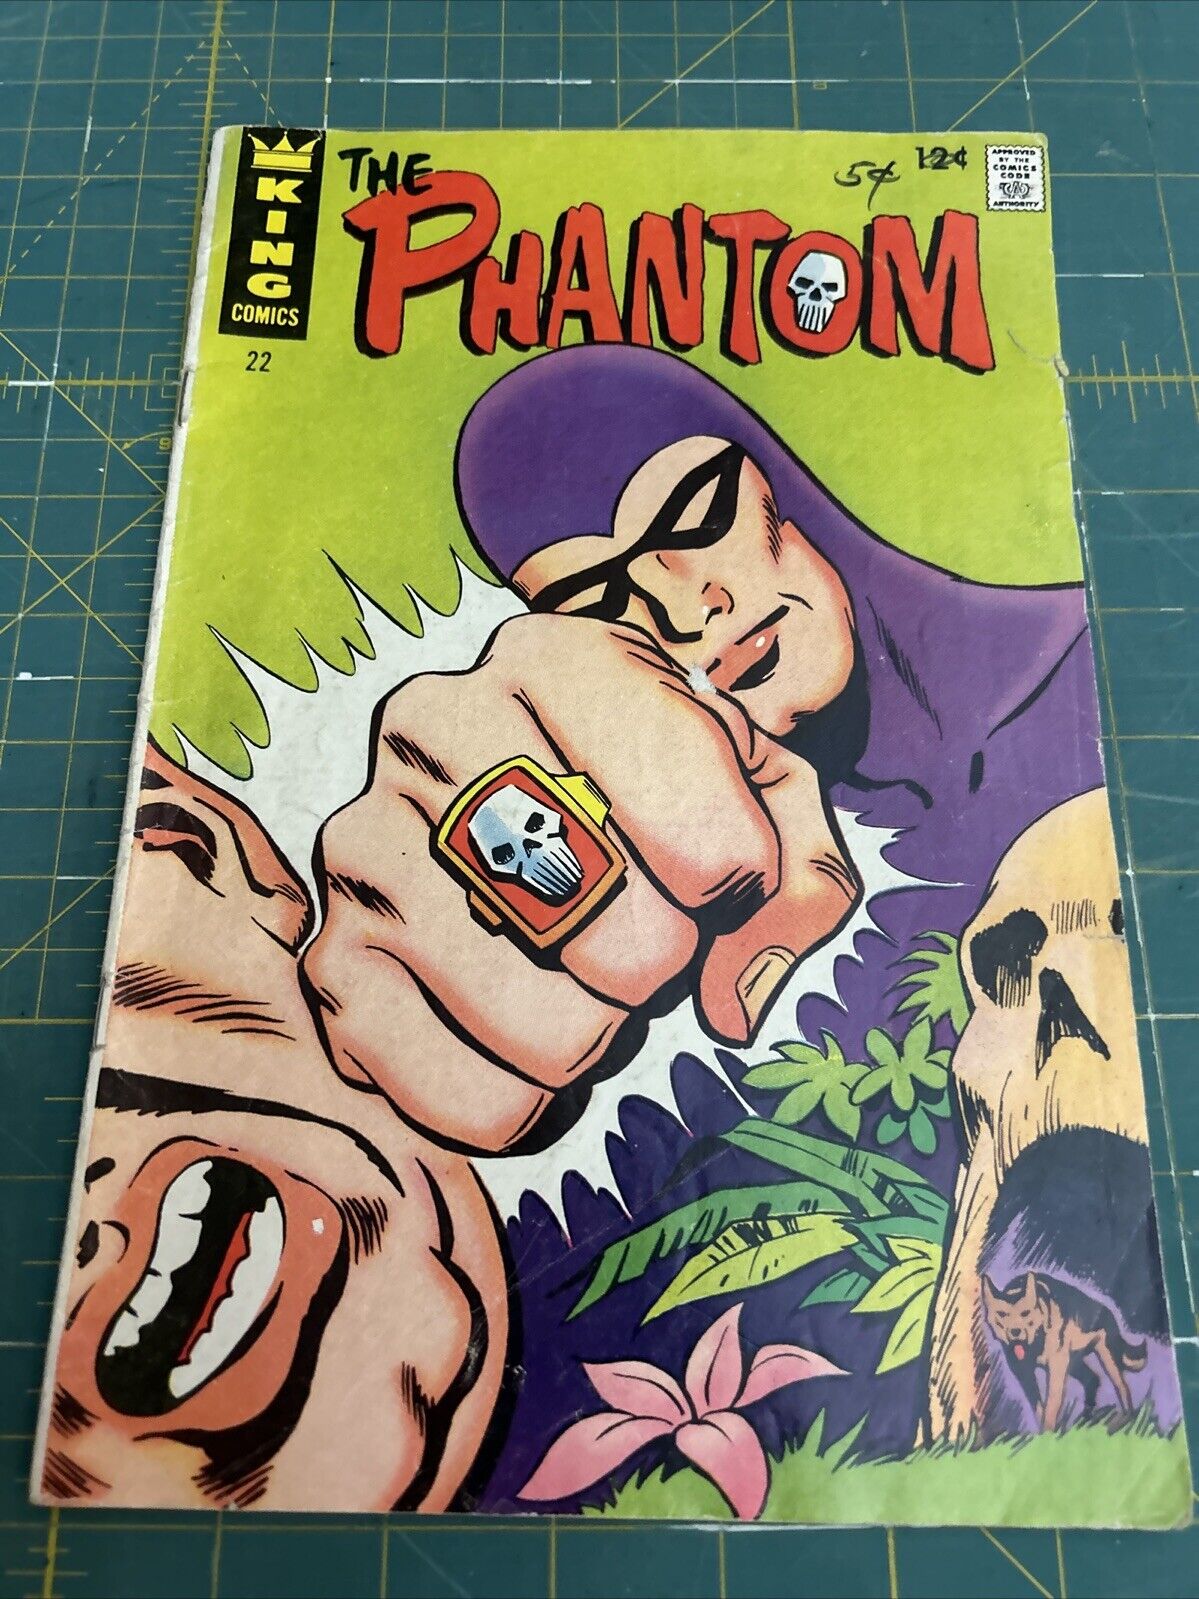 THE PHANTOM #22 King Comics 1967 Silver Age Classic Cover VG